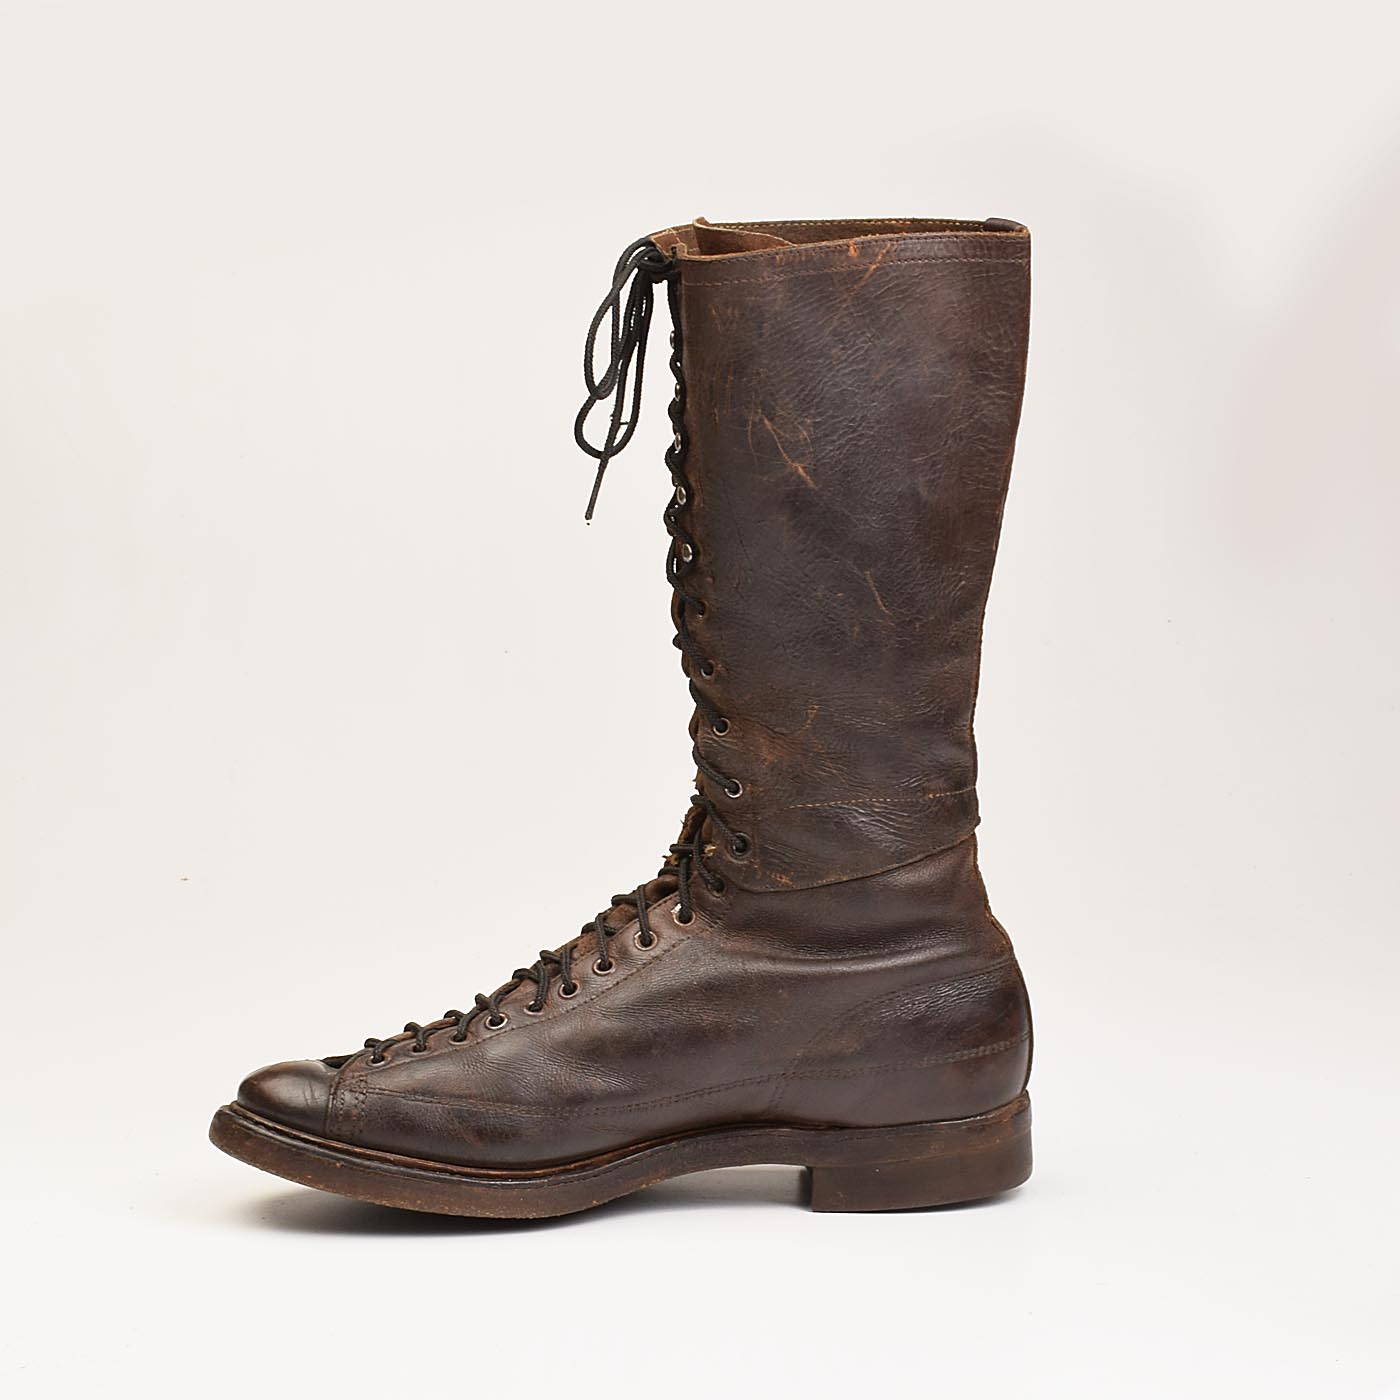 1920s safari boots